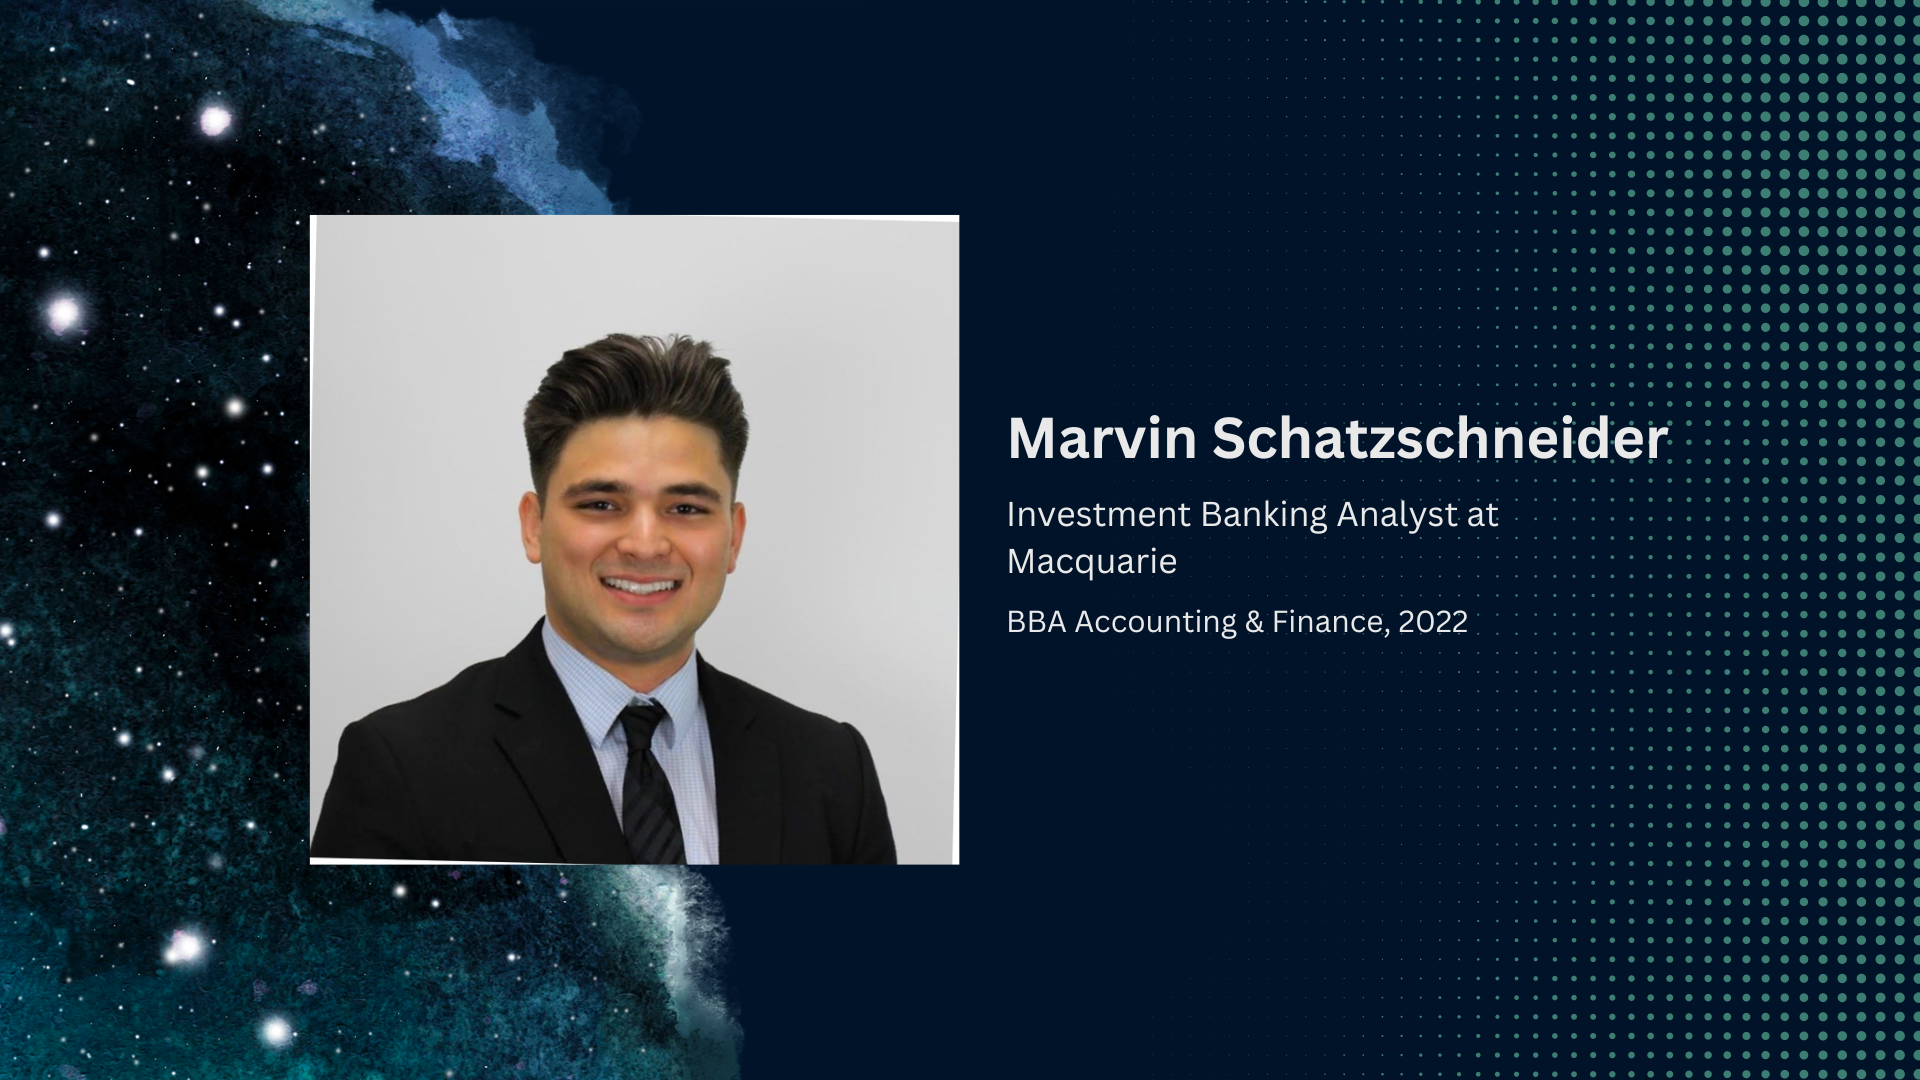 Rising Star in Investment Banking: A Profile of Marvin Schatzschneider